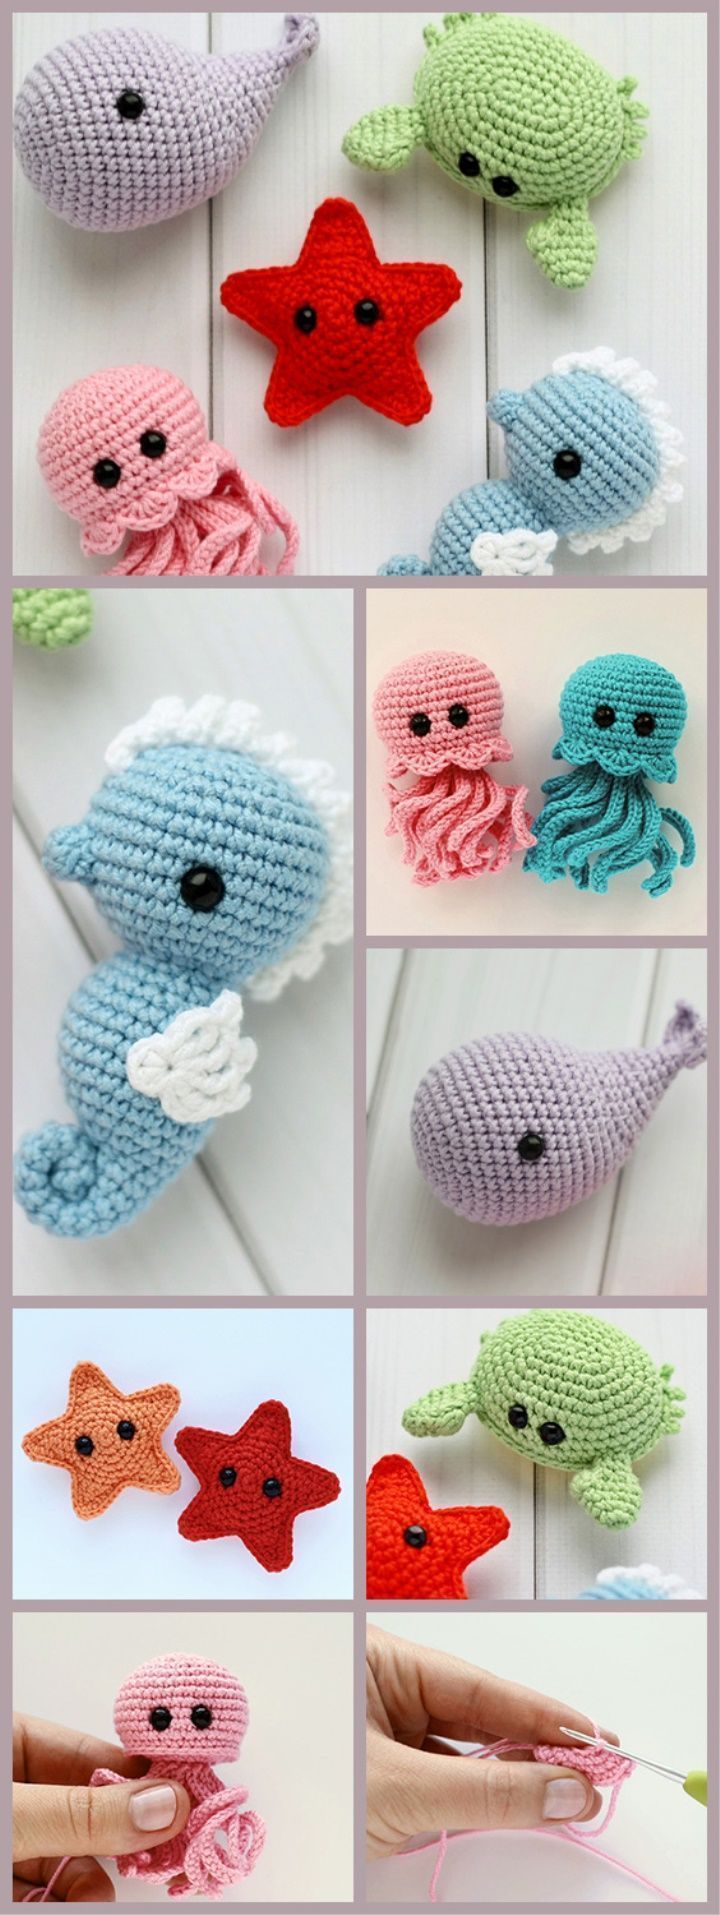 Crochet-Patterns-Step-by-Step-Crochet-Toy-amigurumi-crochettoys-handmade-tutorial-diy.jpg